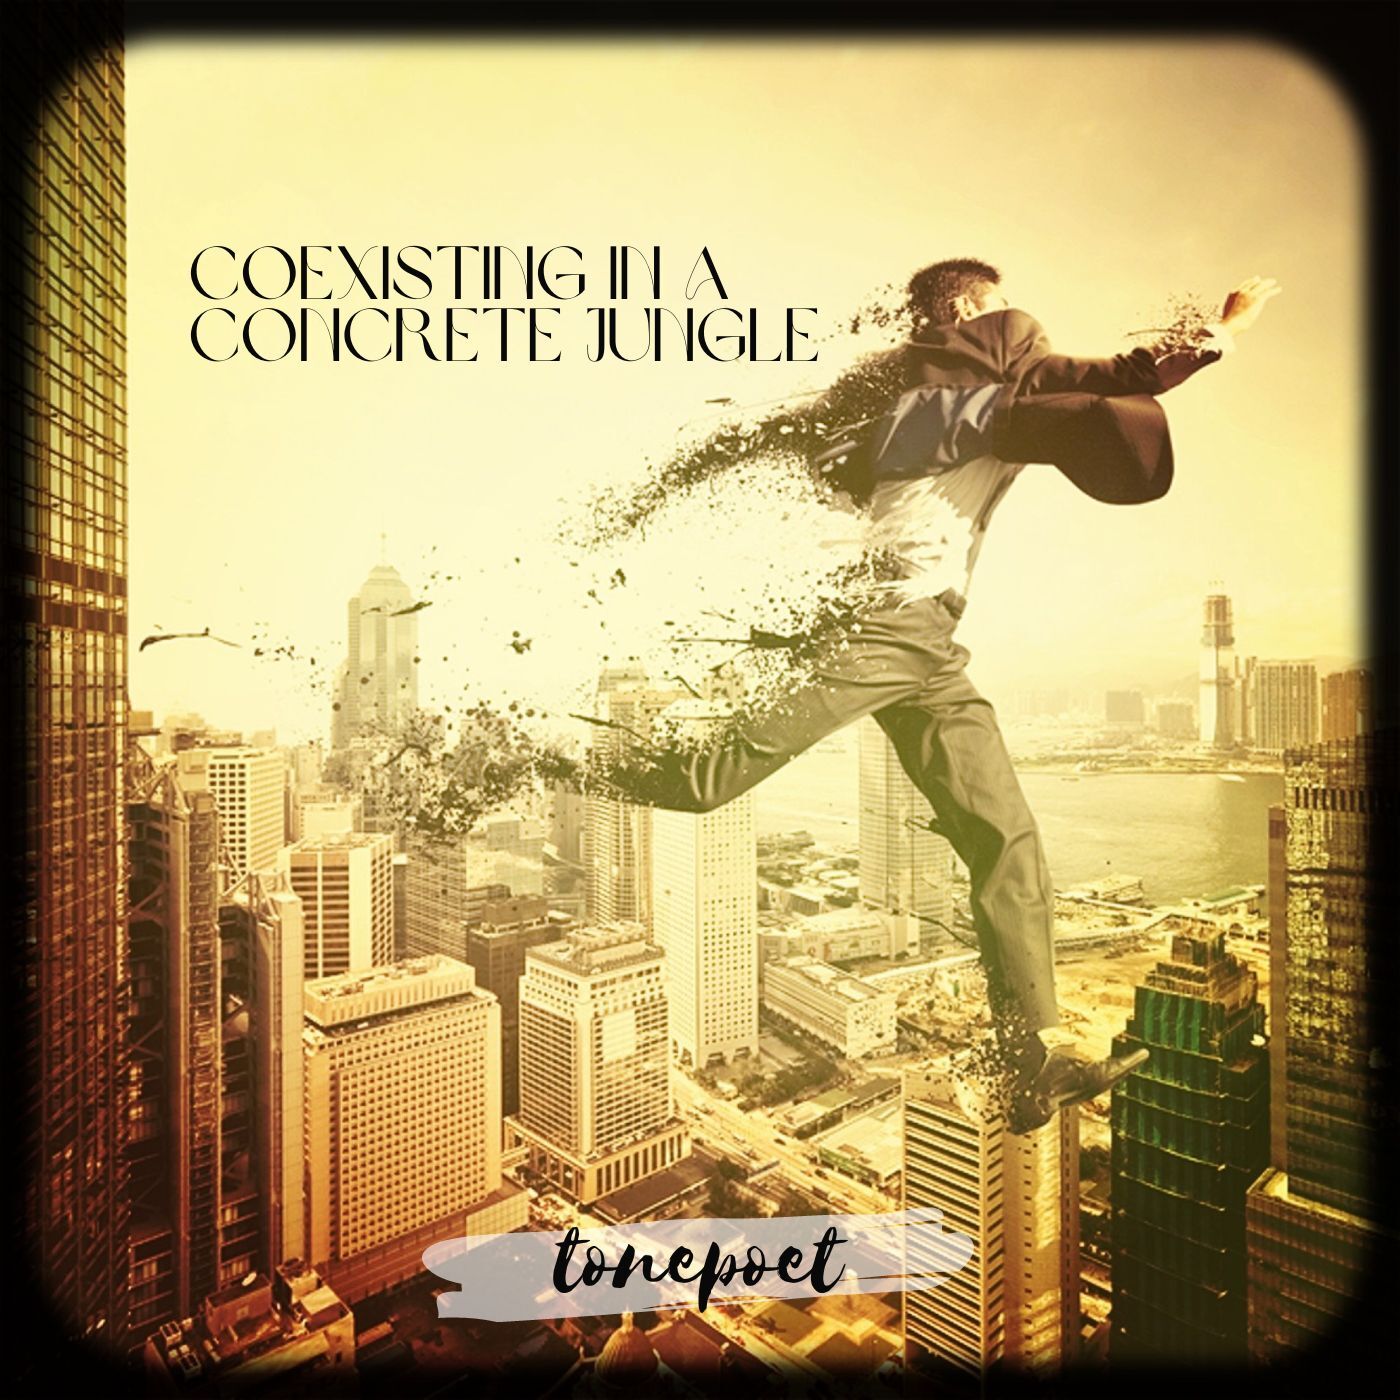 Coexisting_In_A_Concrete_Jungleakpj8.jpg